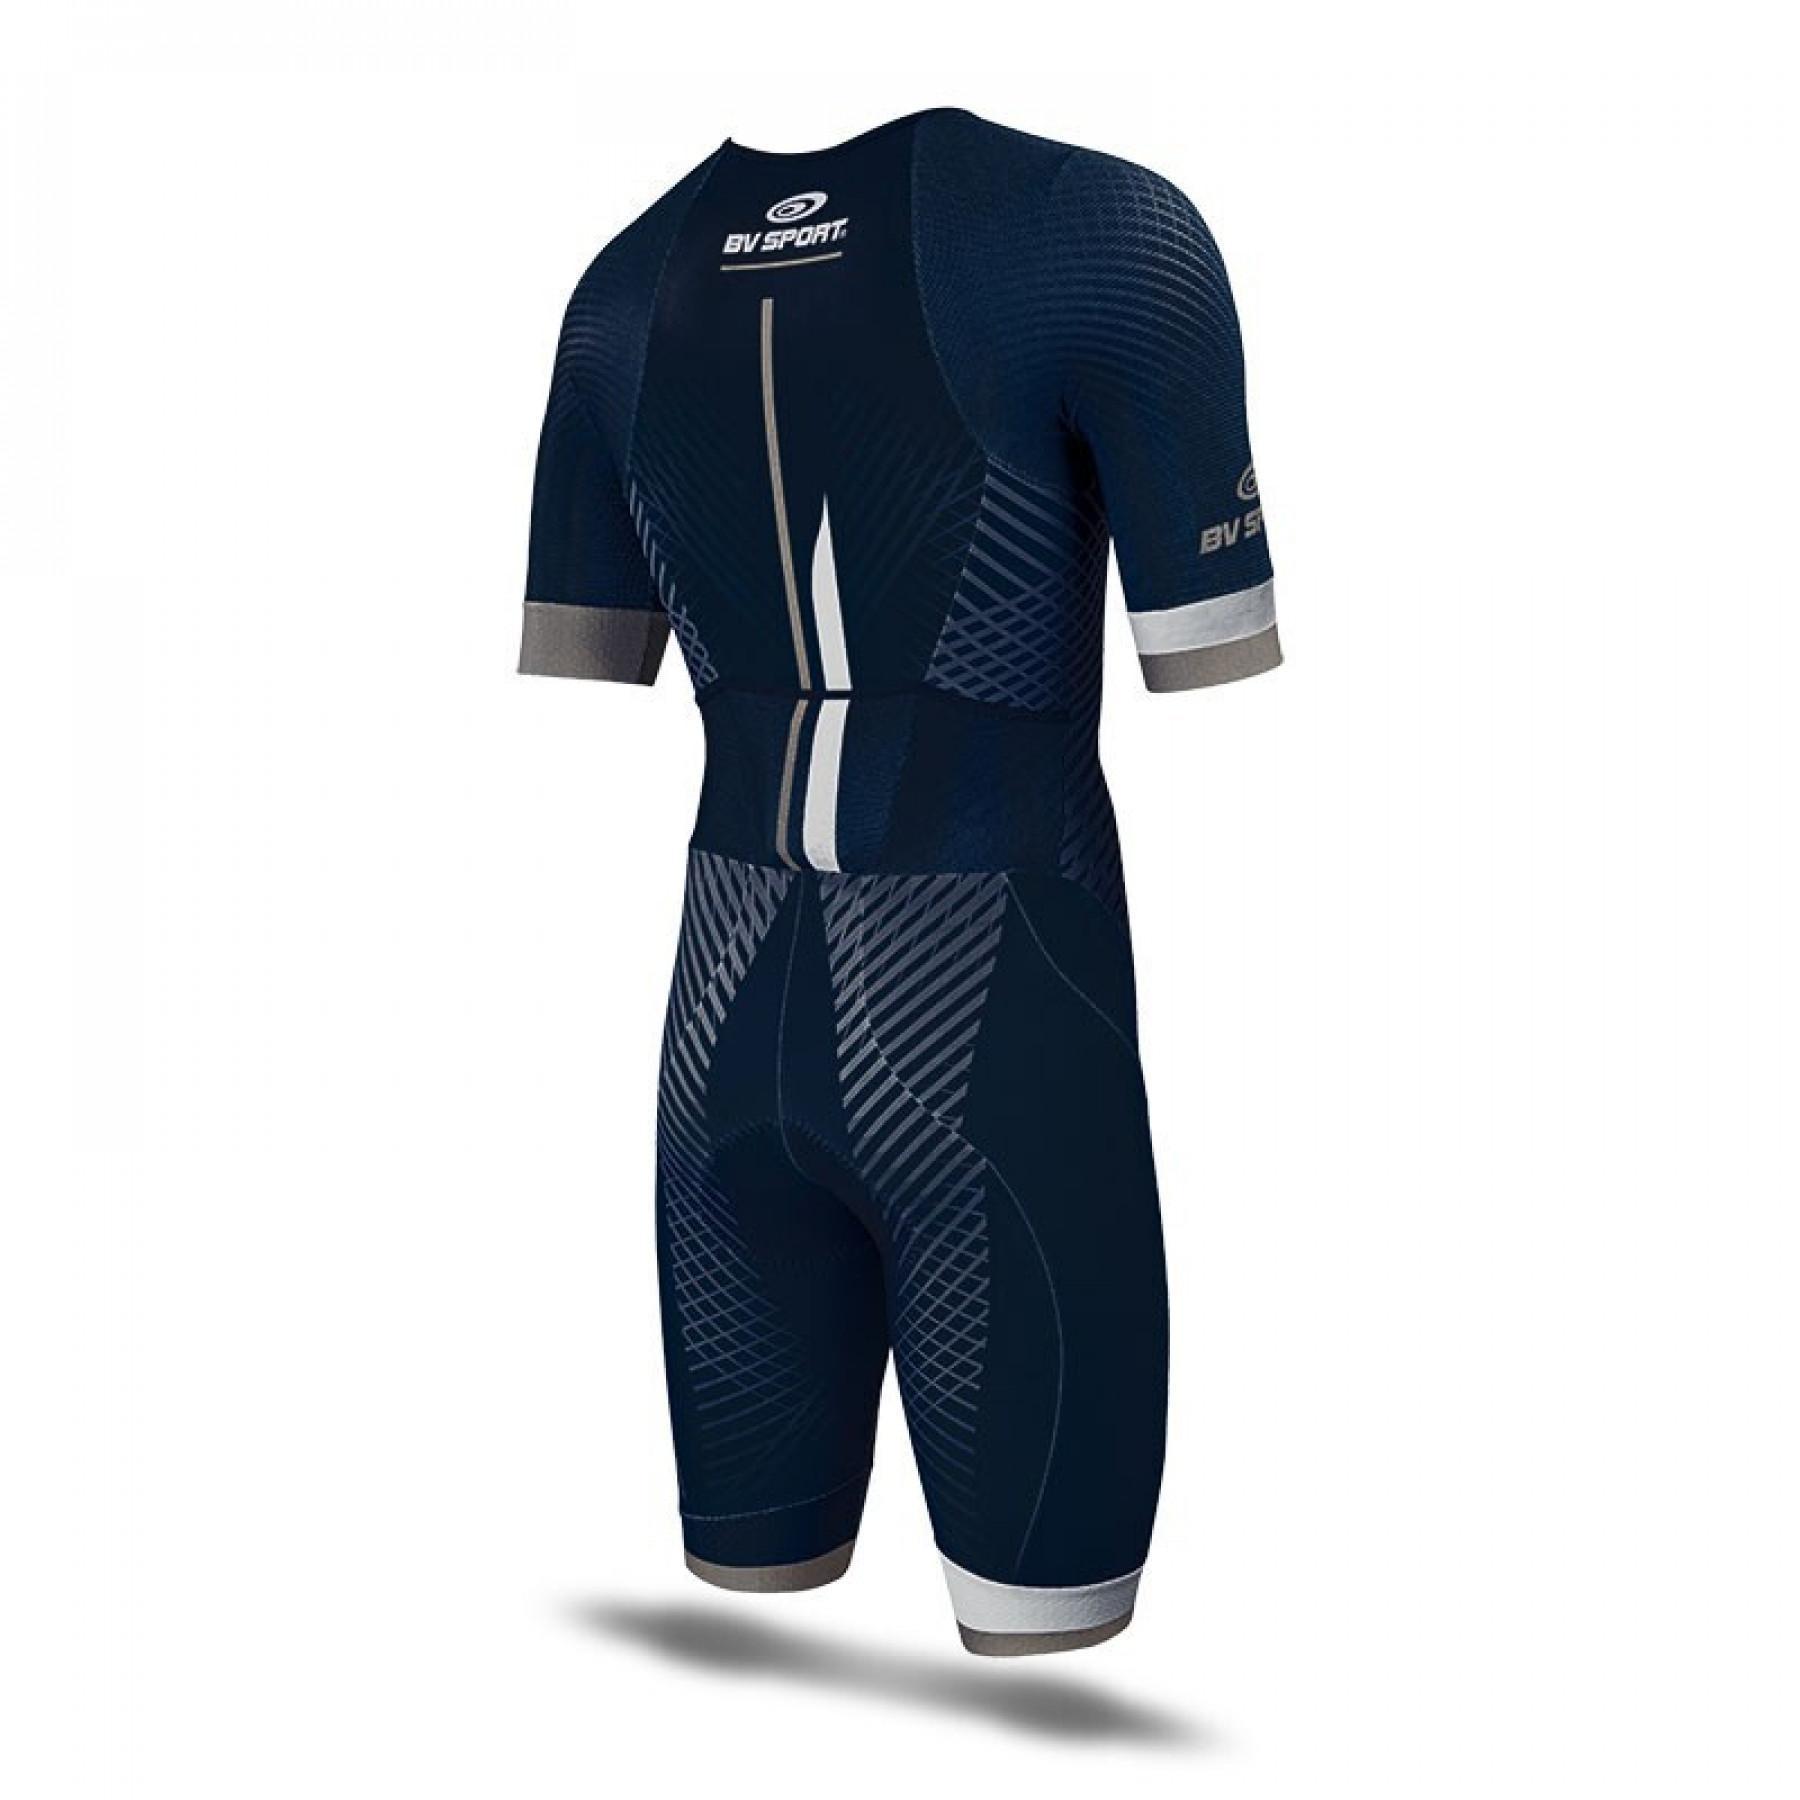 Triathlon suit BV Sport 3x200